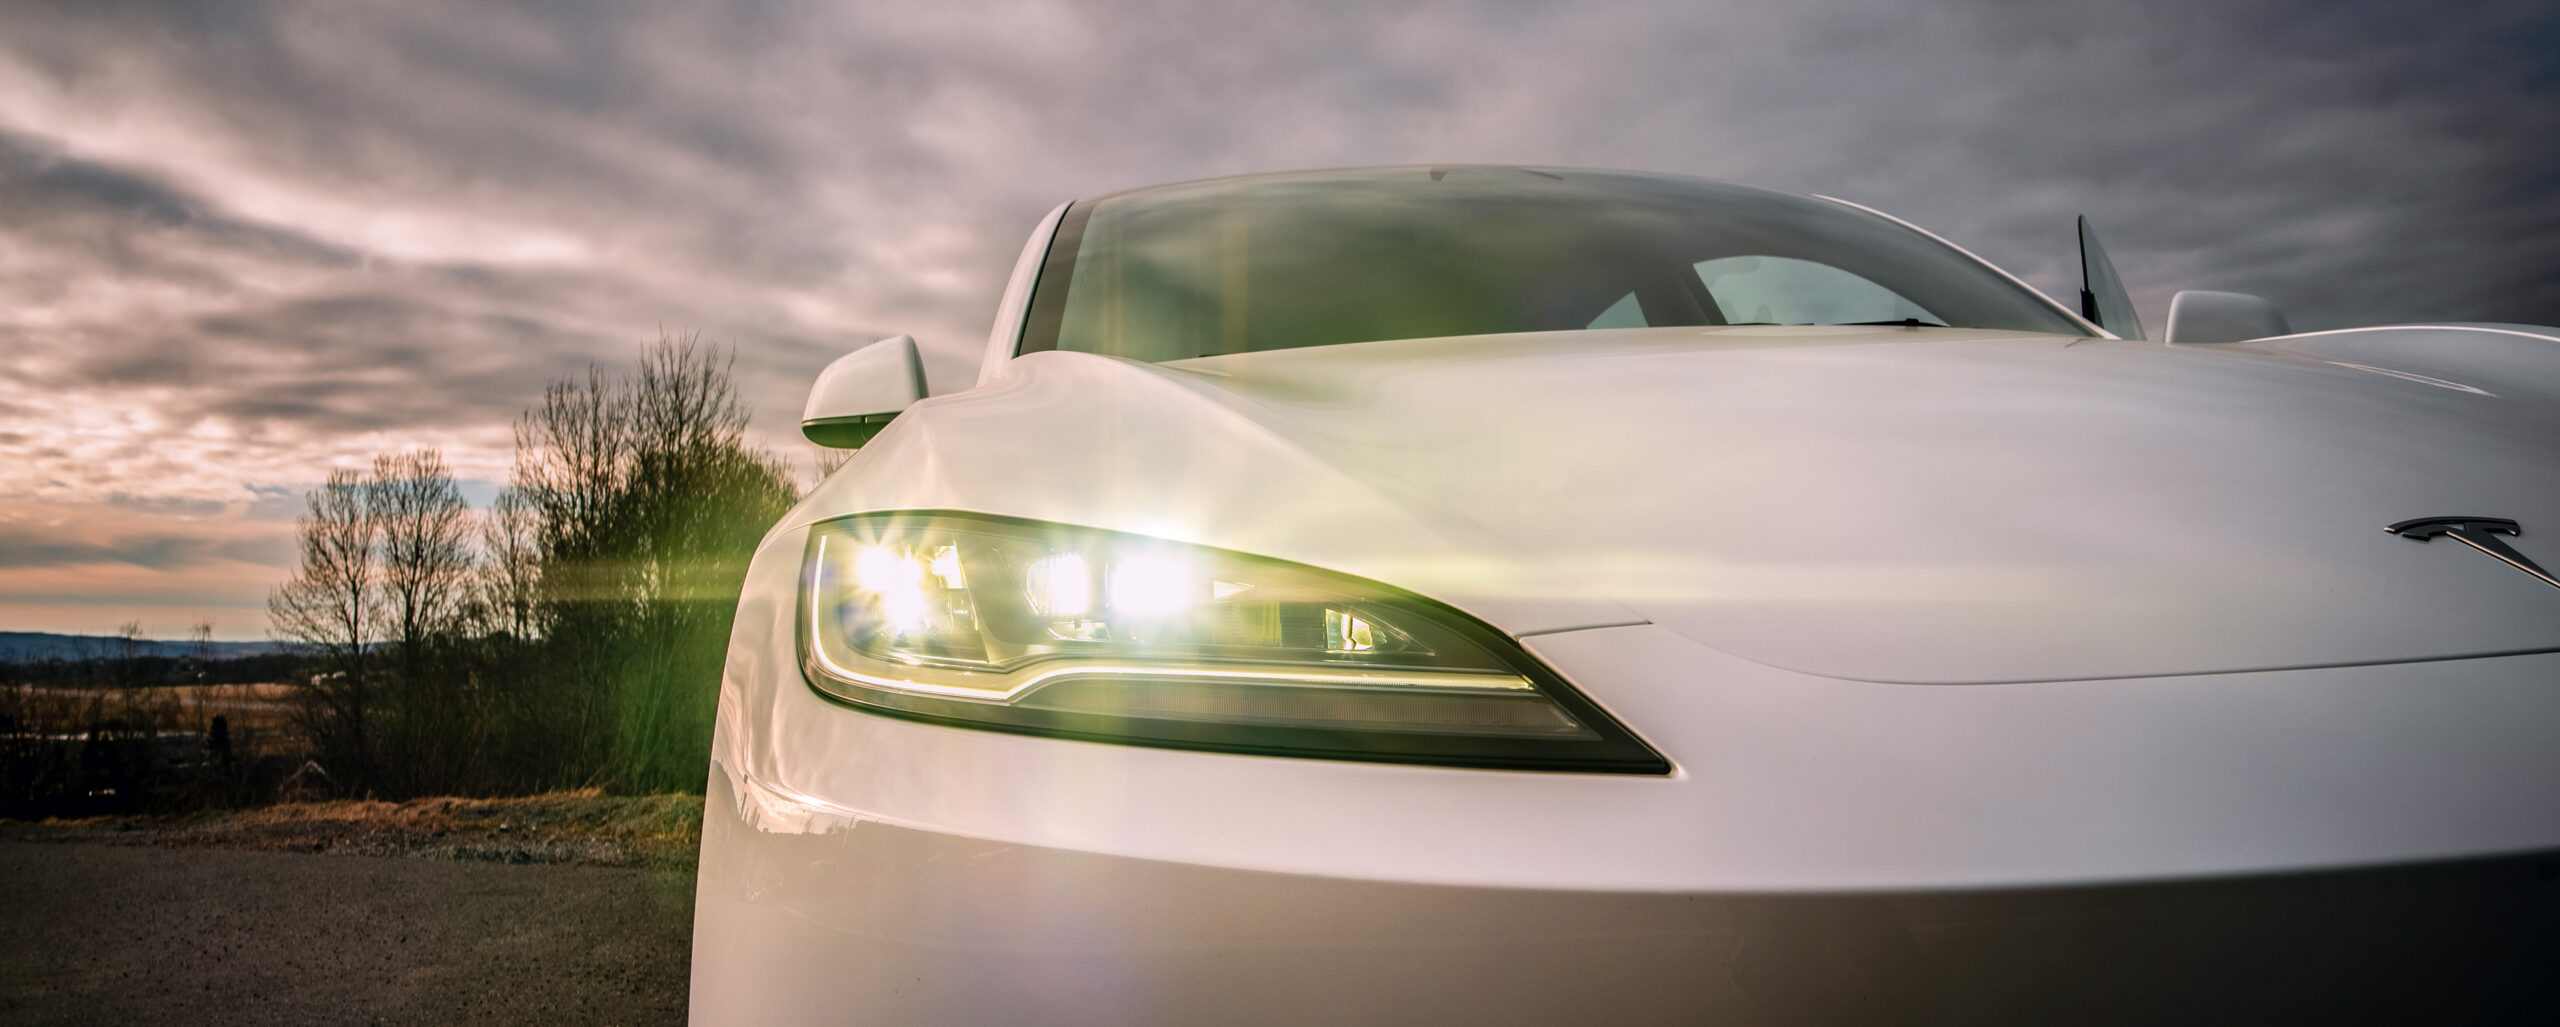 Tesla Model 3 RWD headlight anamorph (downscaled)